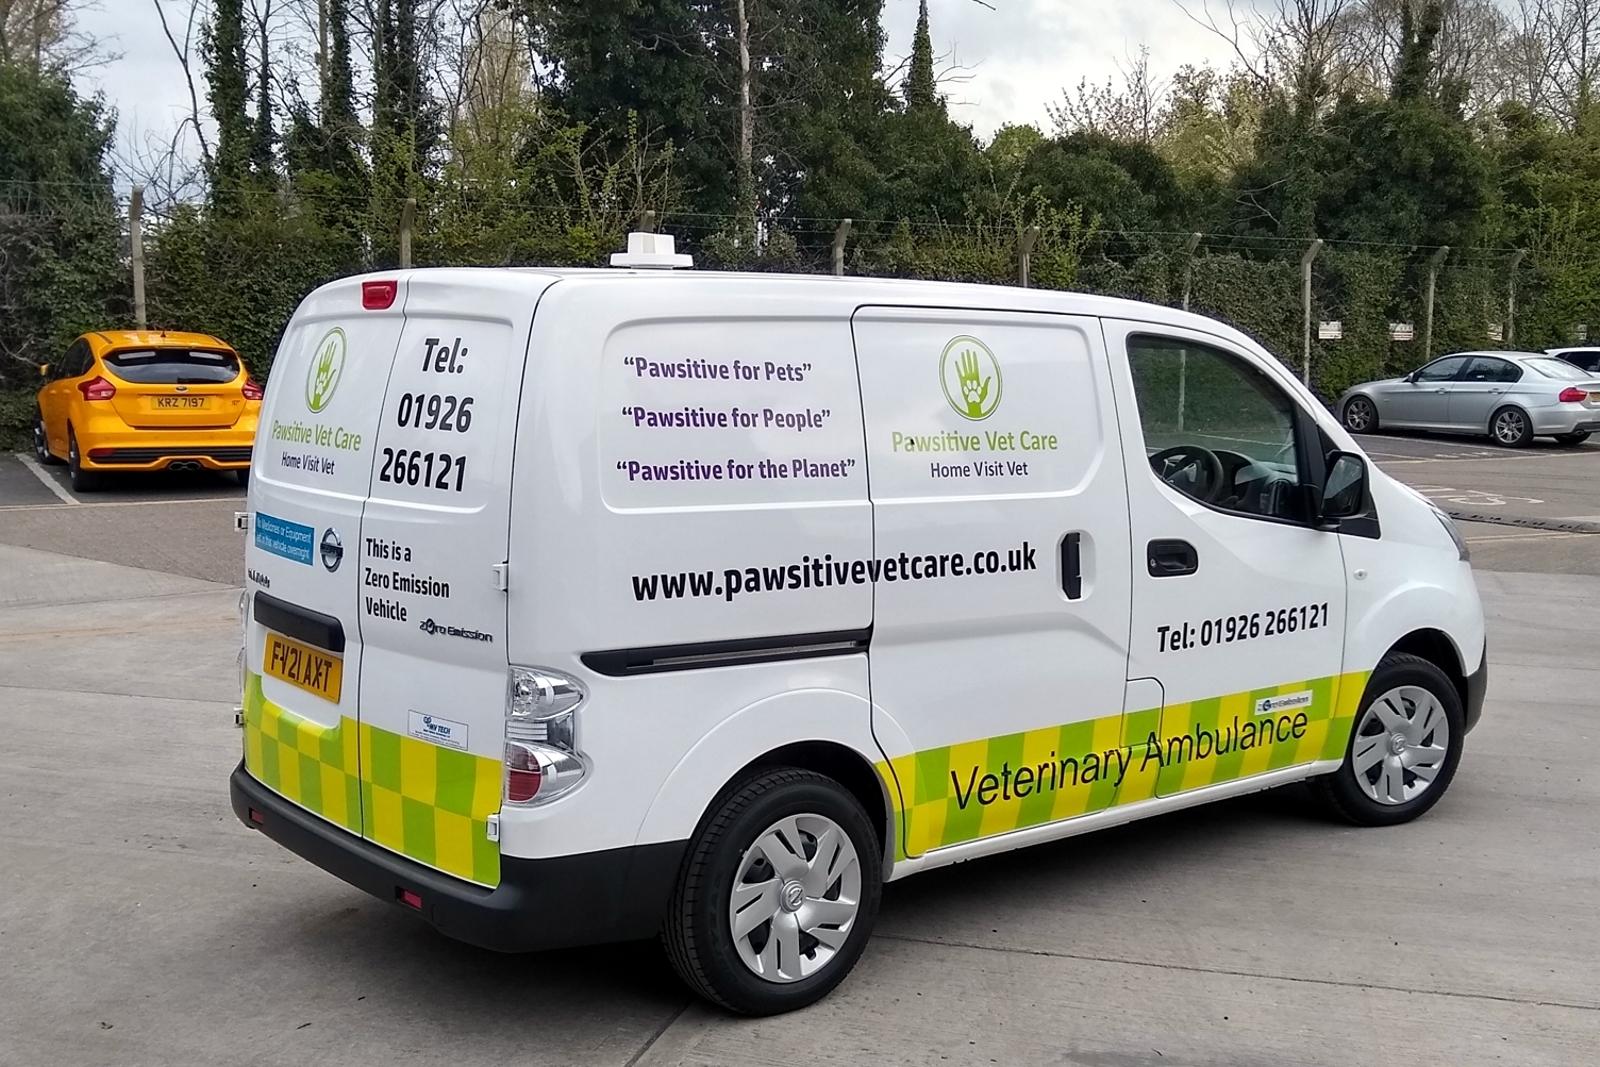 Mobile Veterinary Practice Ambulance for Pawsitive Vet Care - Multi ...